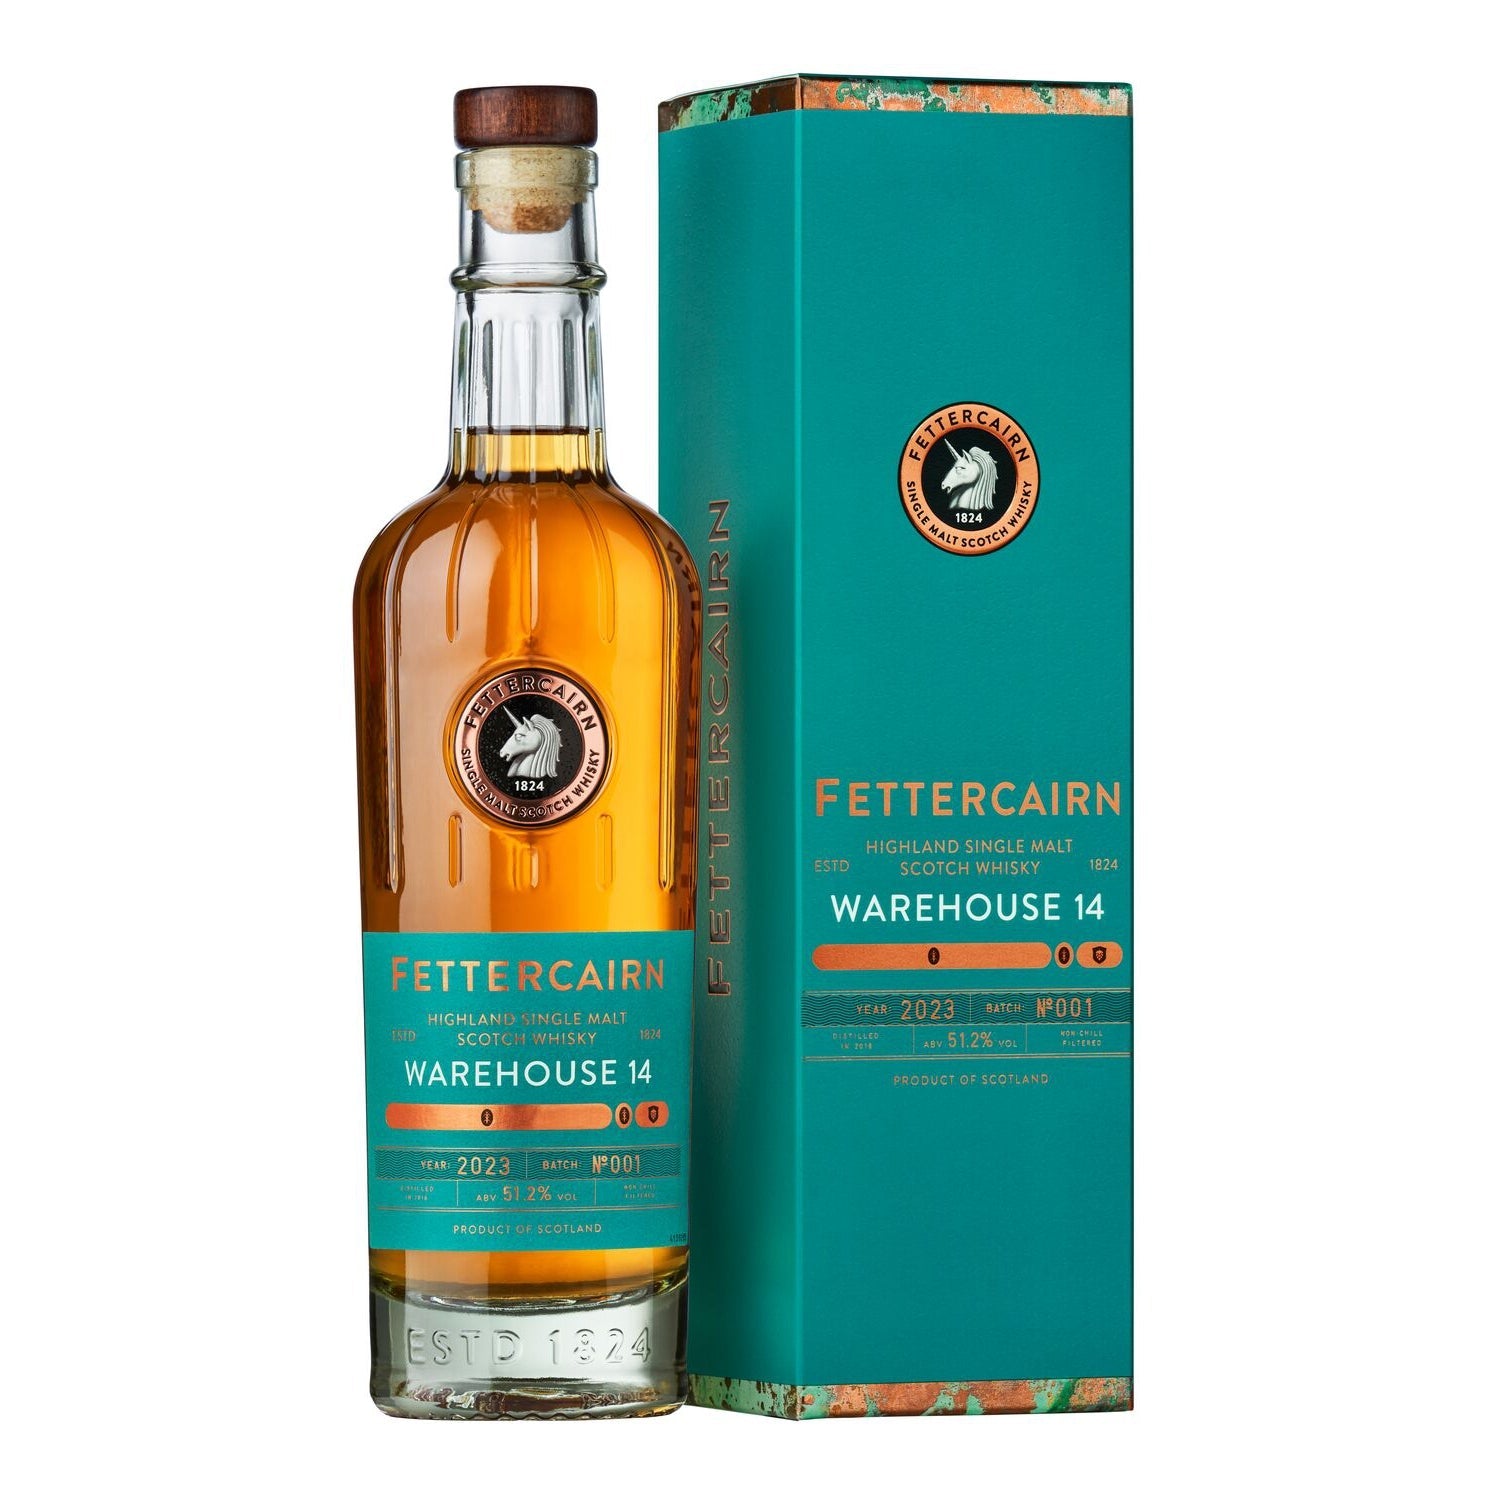 Fettercairn Warehouse No 14 Batch 001 - Single Malt Scotch Whisky-Single Malt Scotch Whisky-5013967019973-Fountainhall Wines